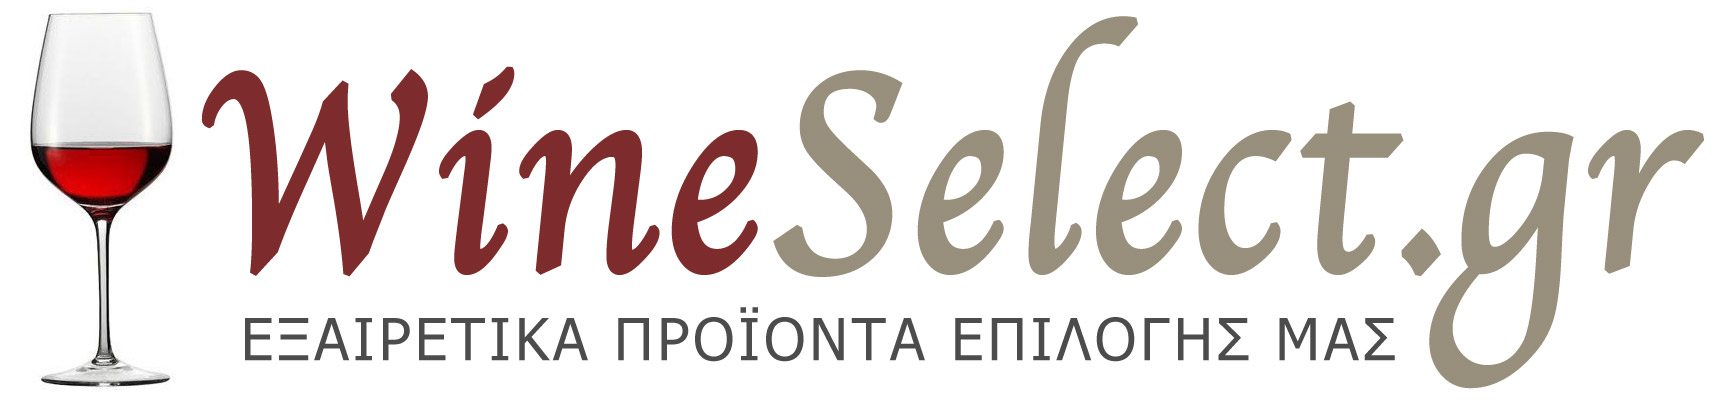 wineselect logo new